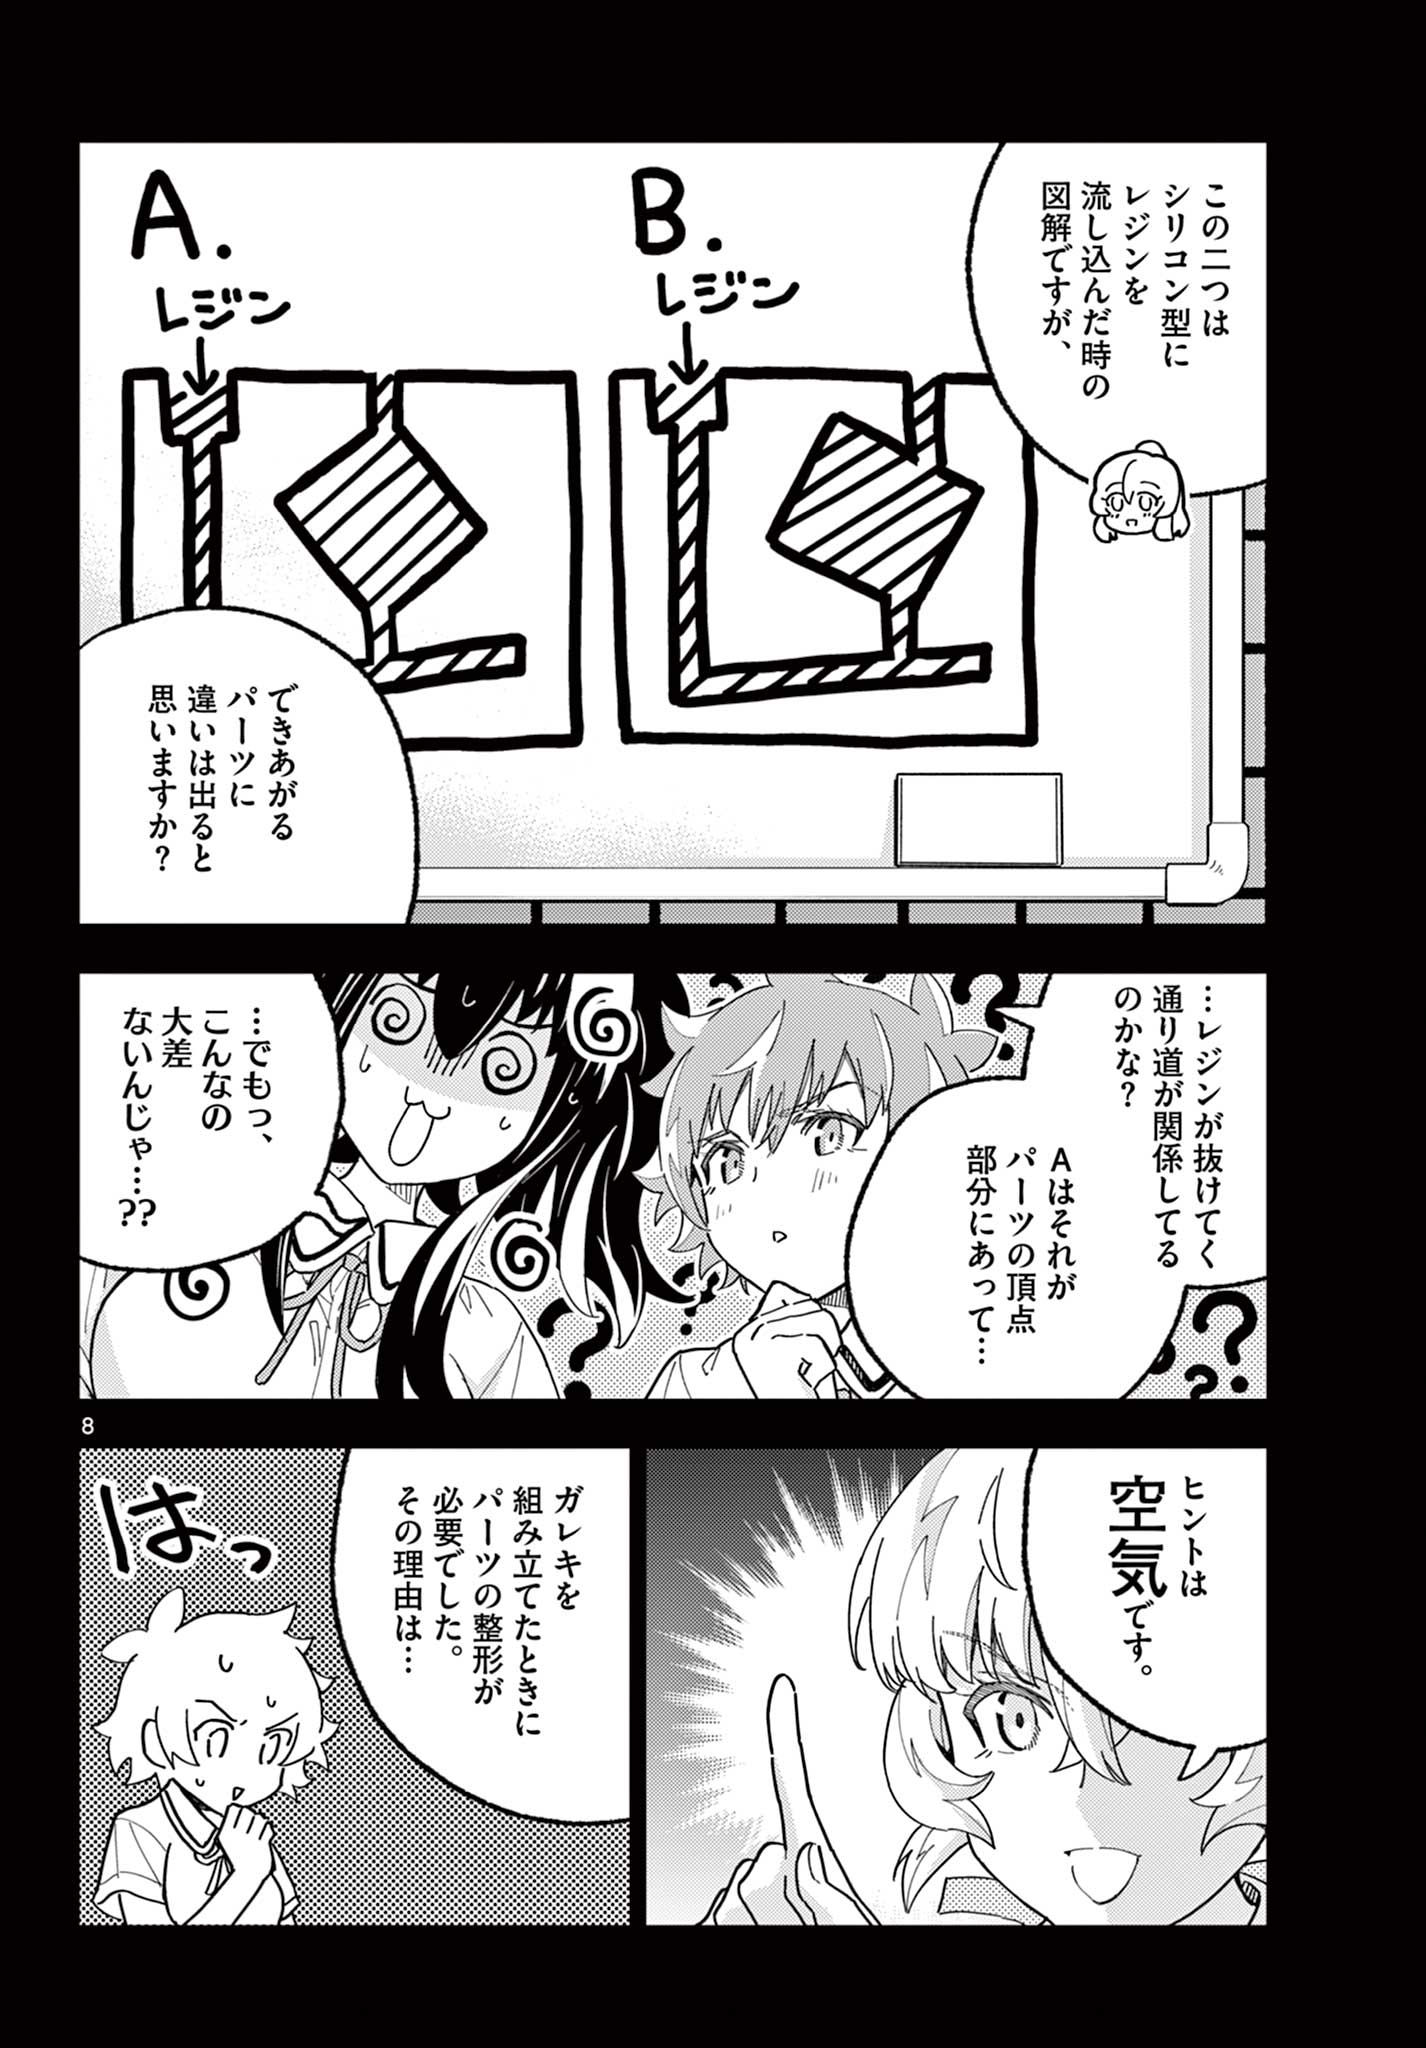 Gareki! Modeller Girls no Houkago - Chapter 20 - Page 8